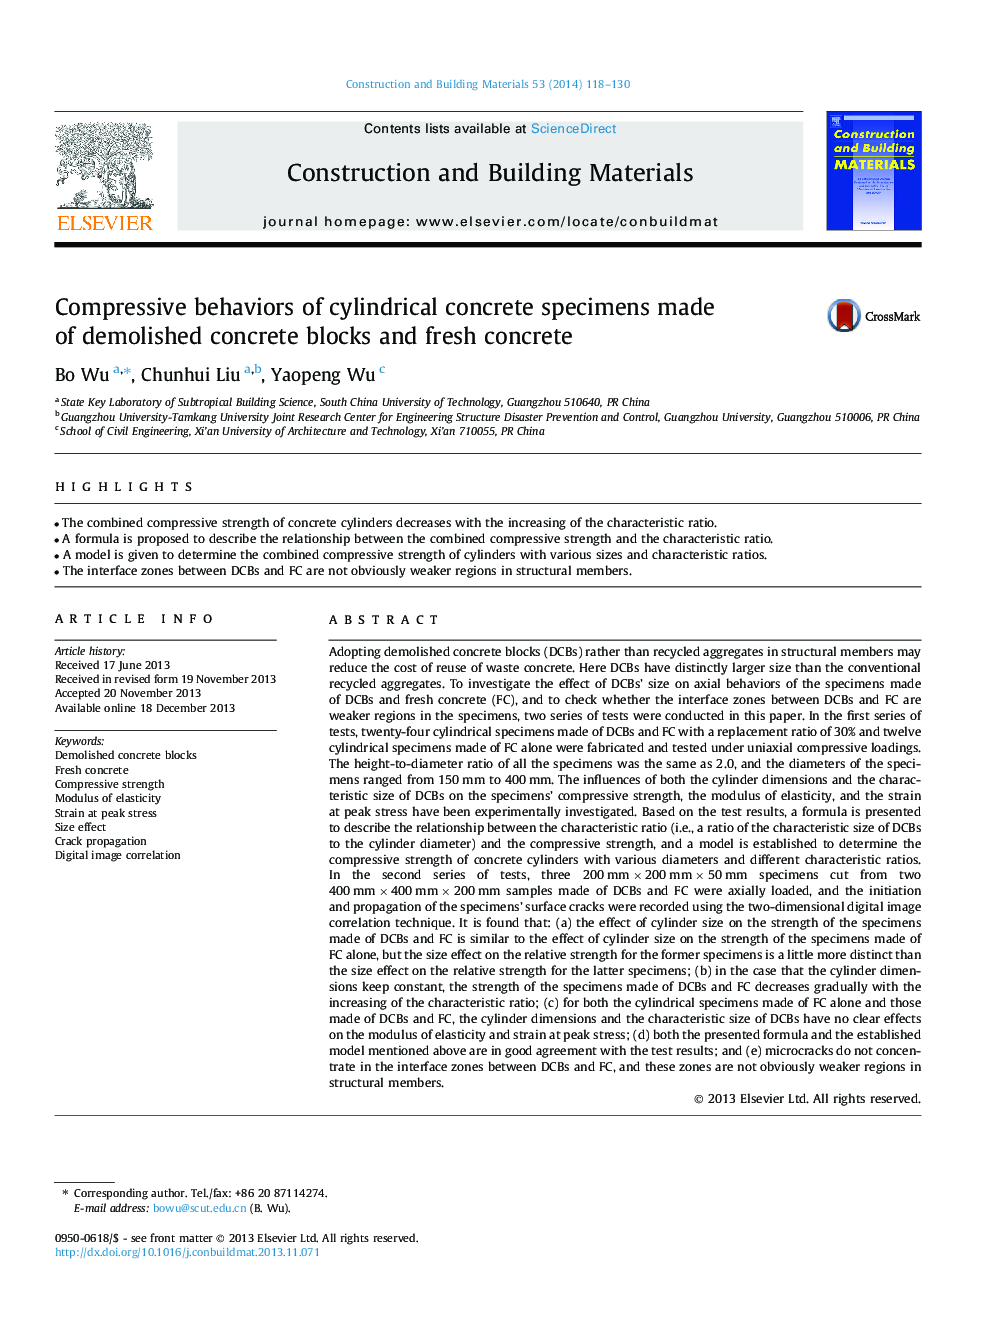 Compressive behaviors of cylindrical concrete specimens made of demolished concrete blocks and fresh concrete